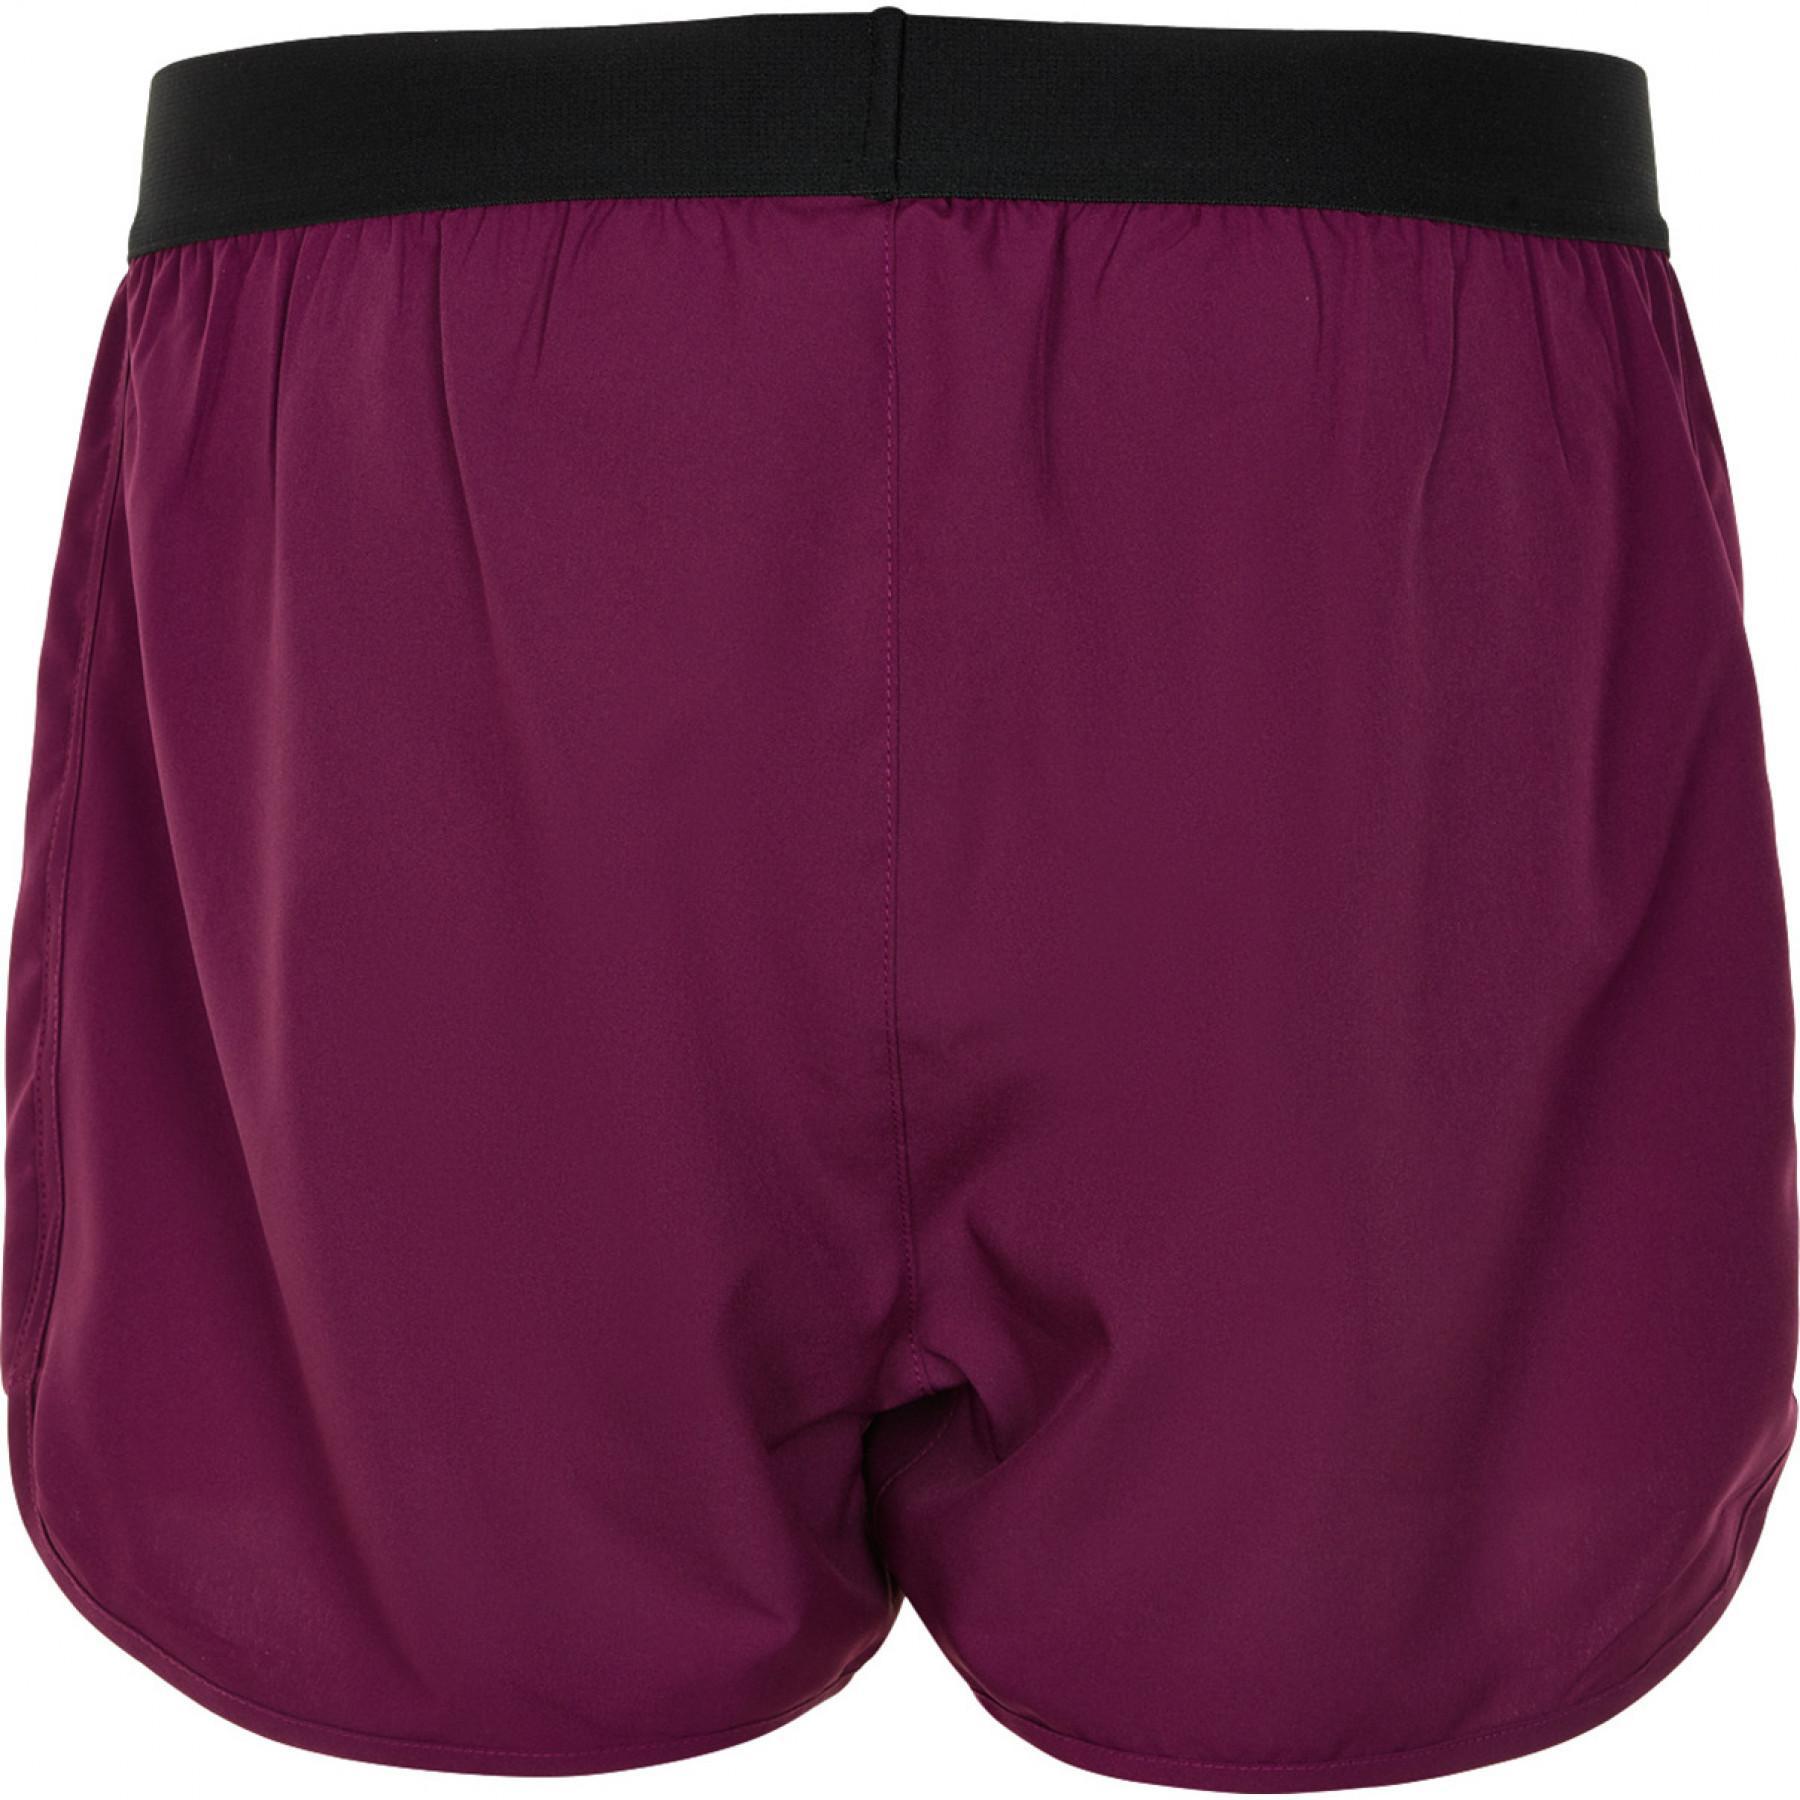 Women's shorts Newline 2-lay